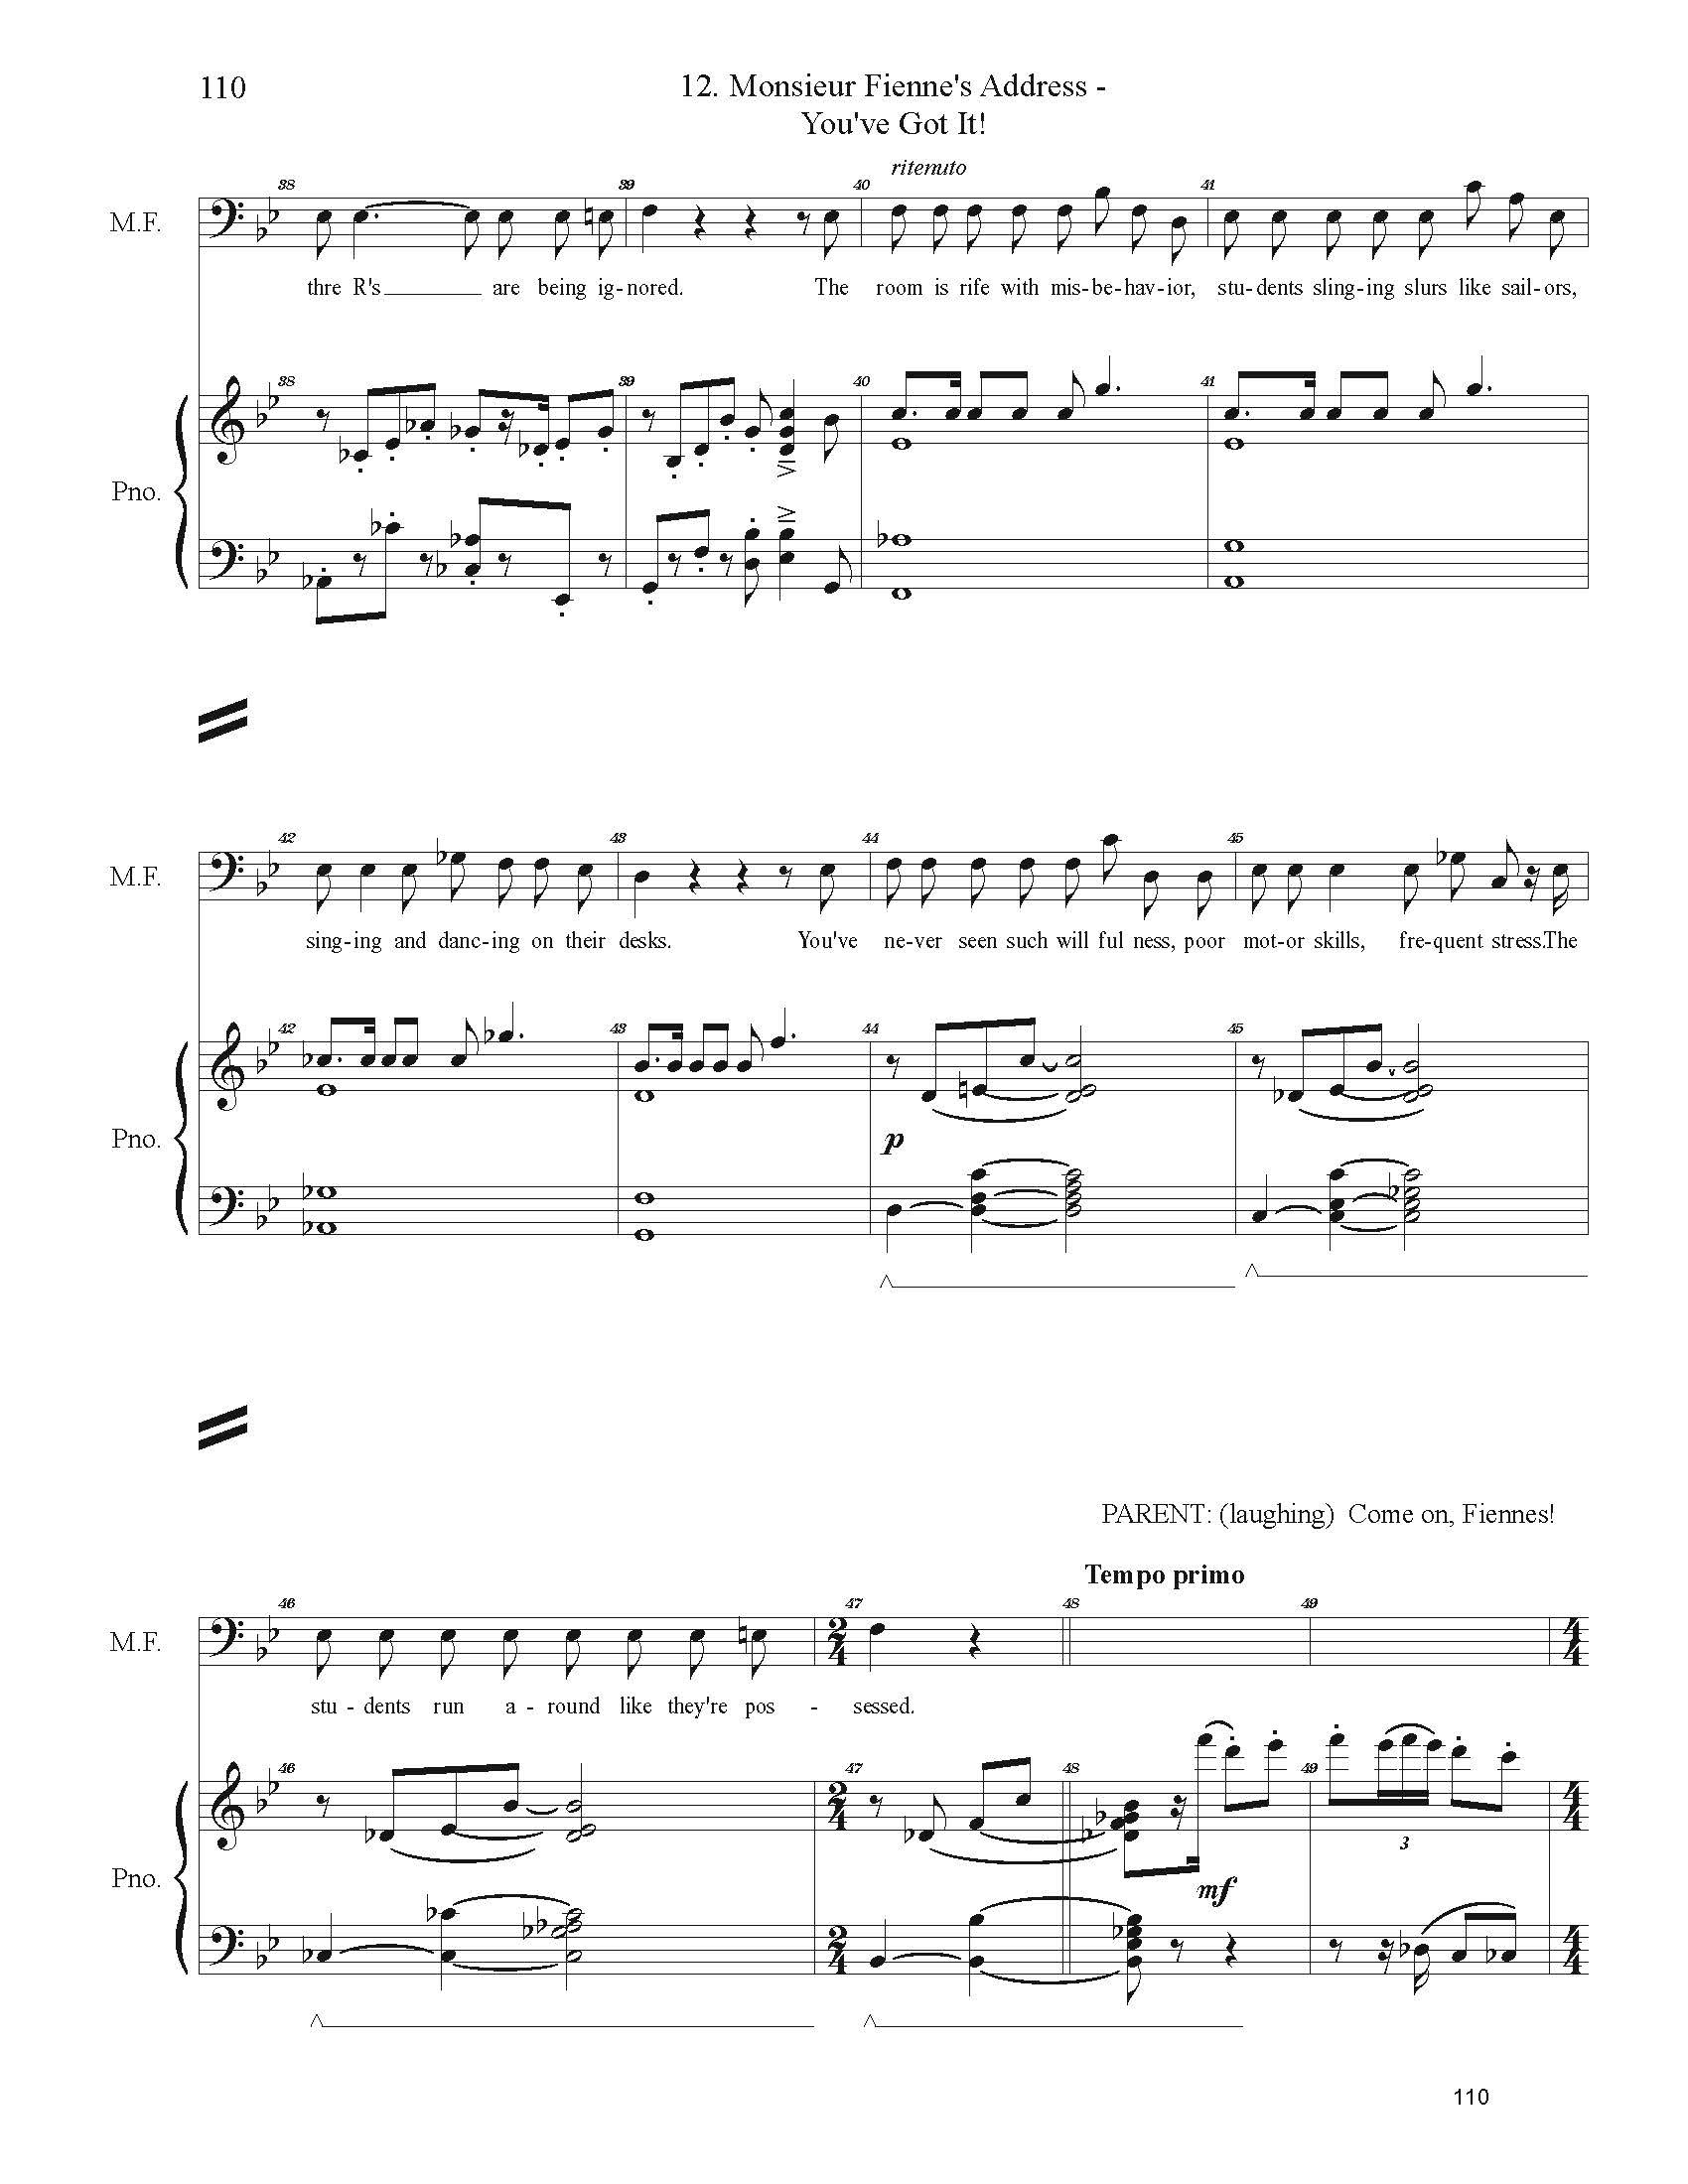 FULL PIANO VOCAL SCORE DRAFT 1 - Score_Page_110.jpg